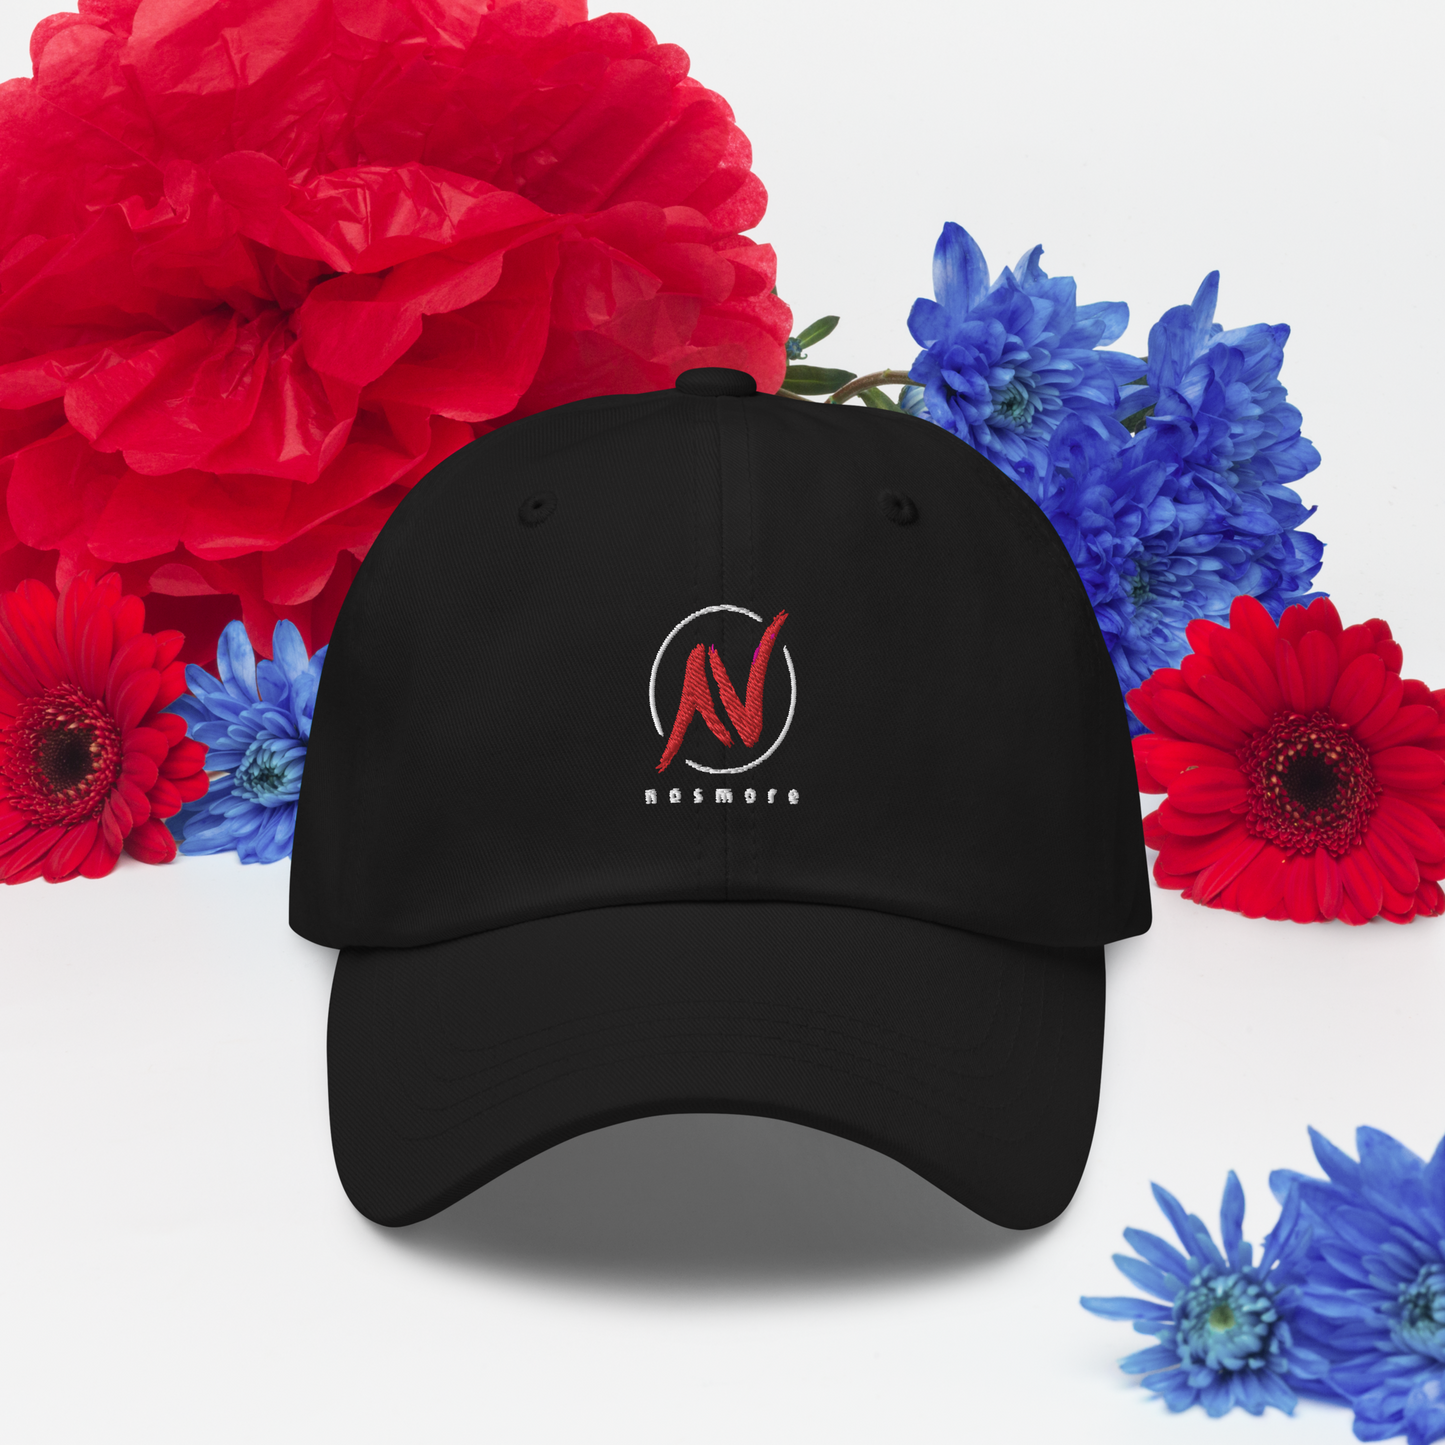 "nasmore official" hat